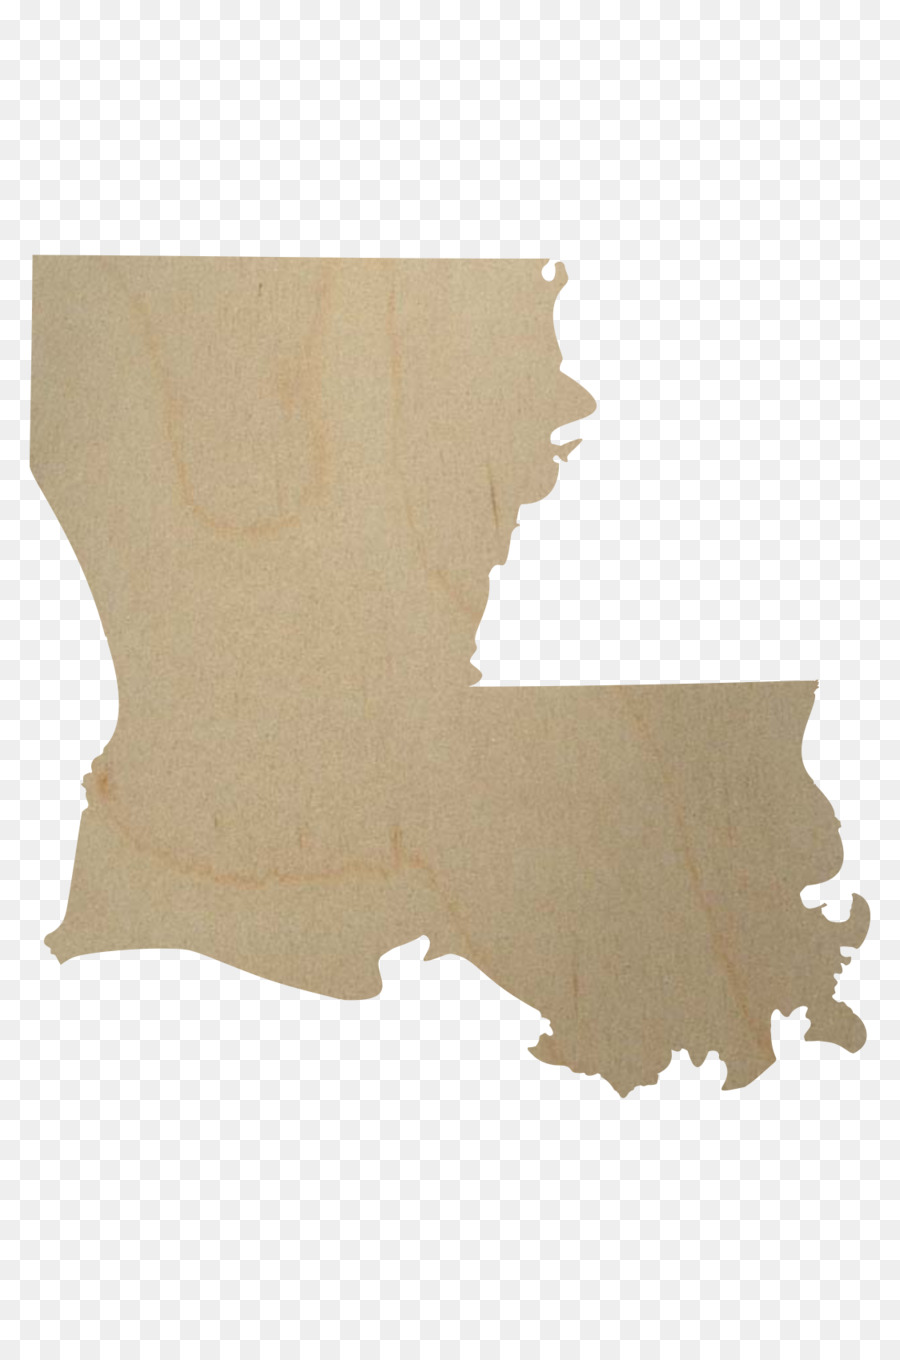 Louisiana Mua Miền Nam Hoa Kỳ New Orleans Bản Đồ - bản đồ